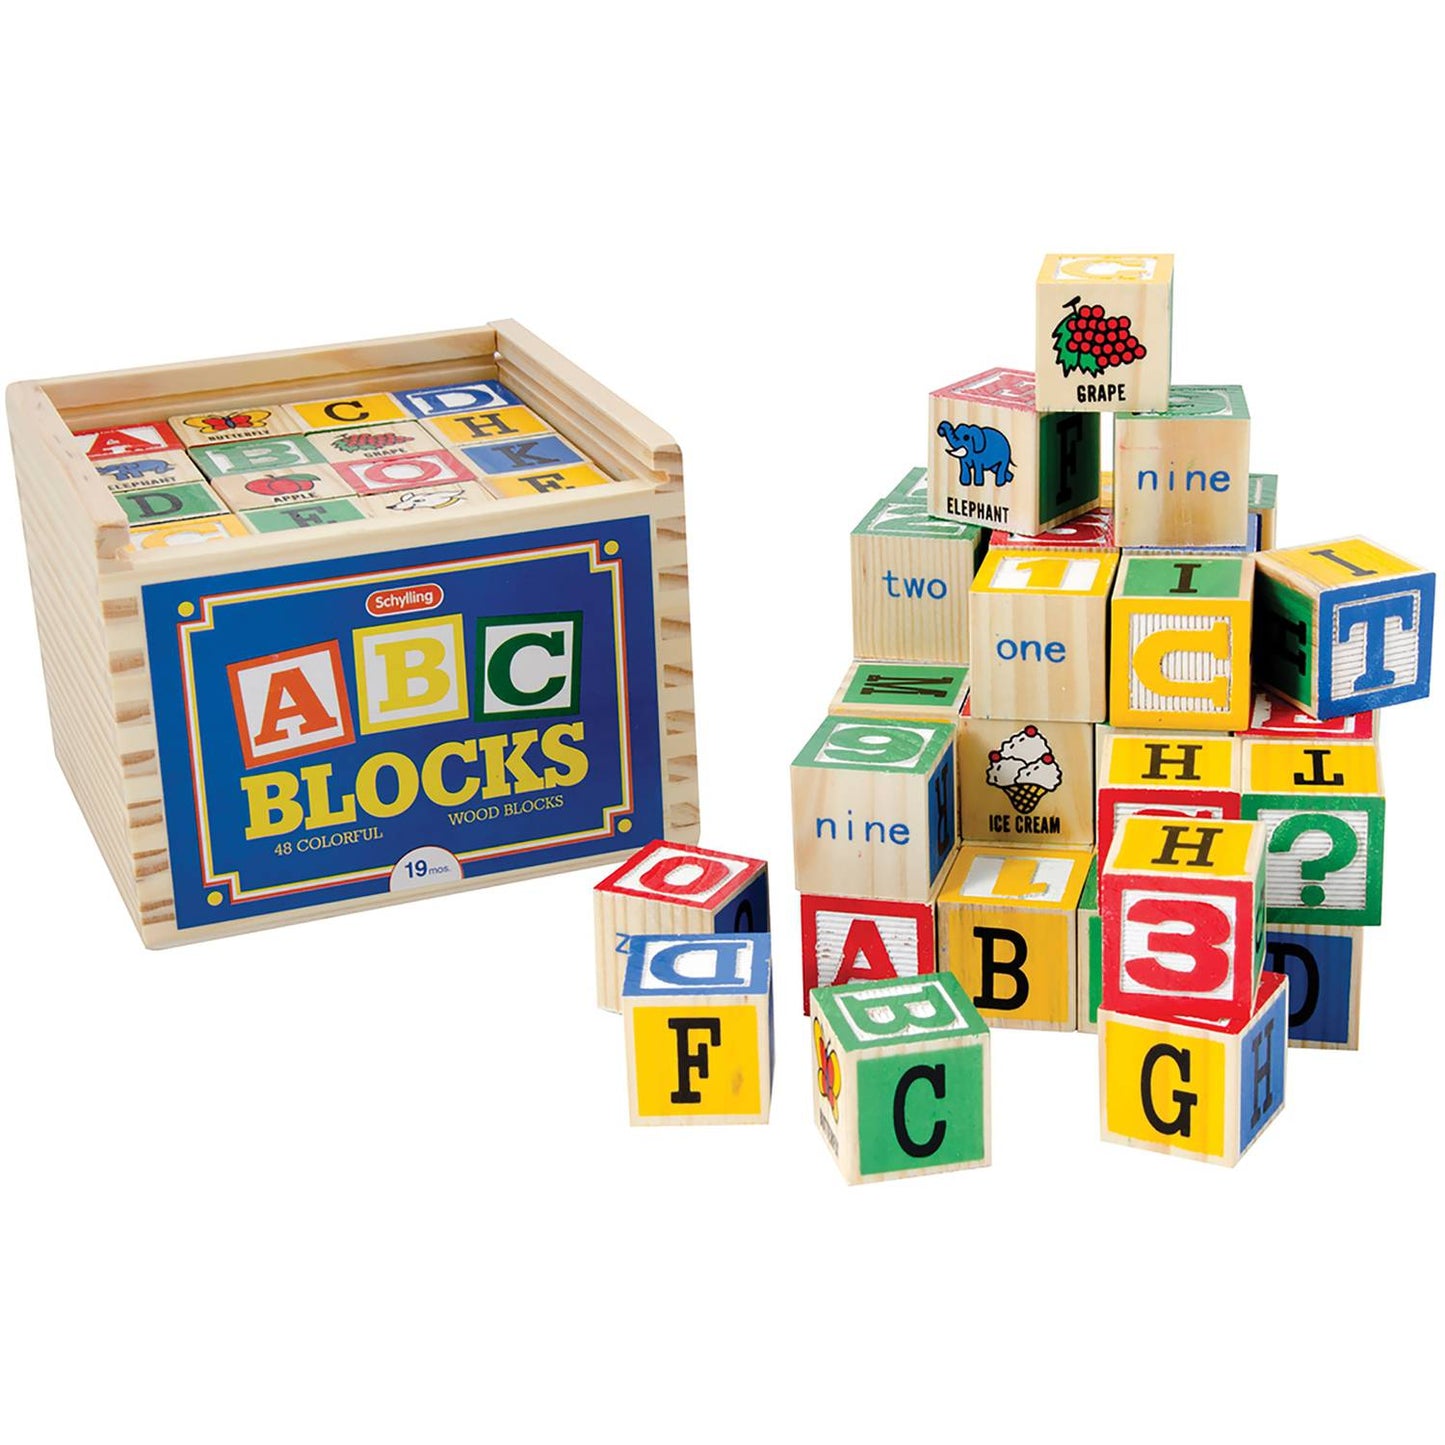 A - ABC Blocks